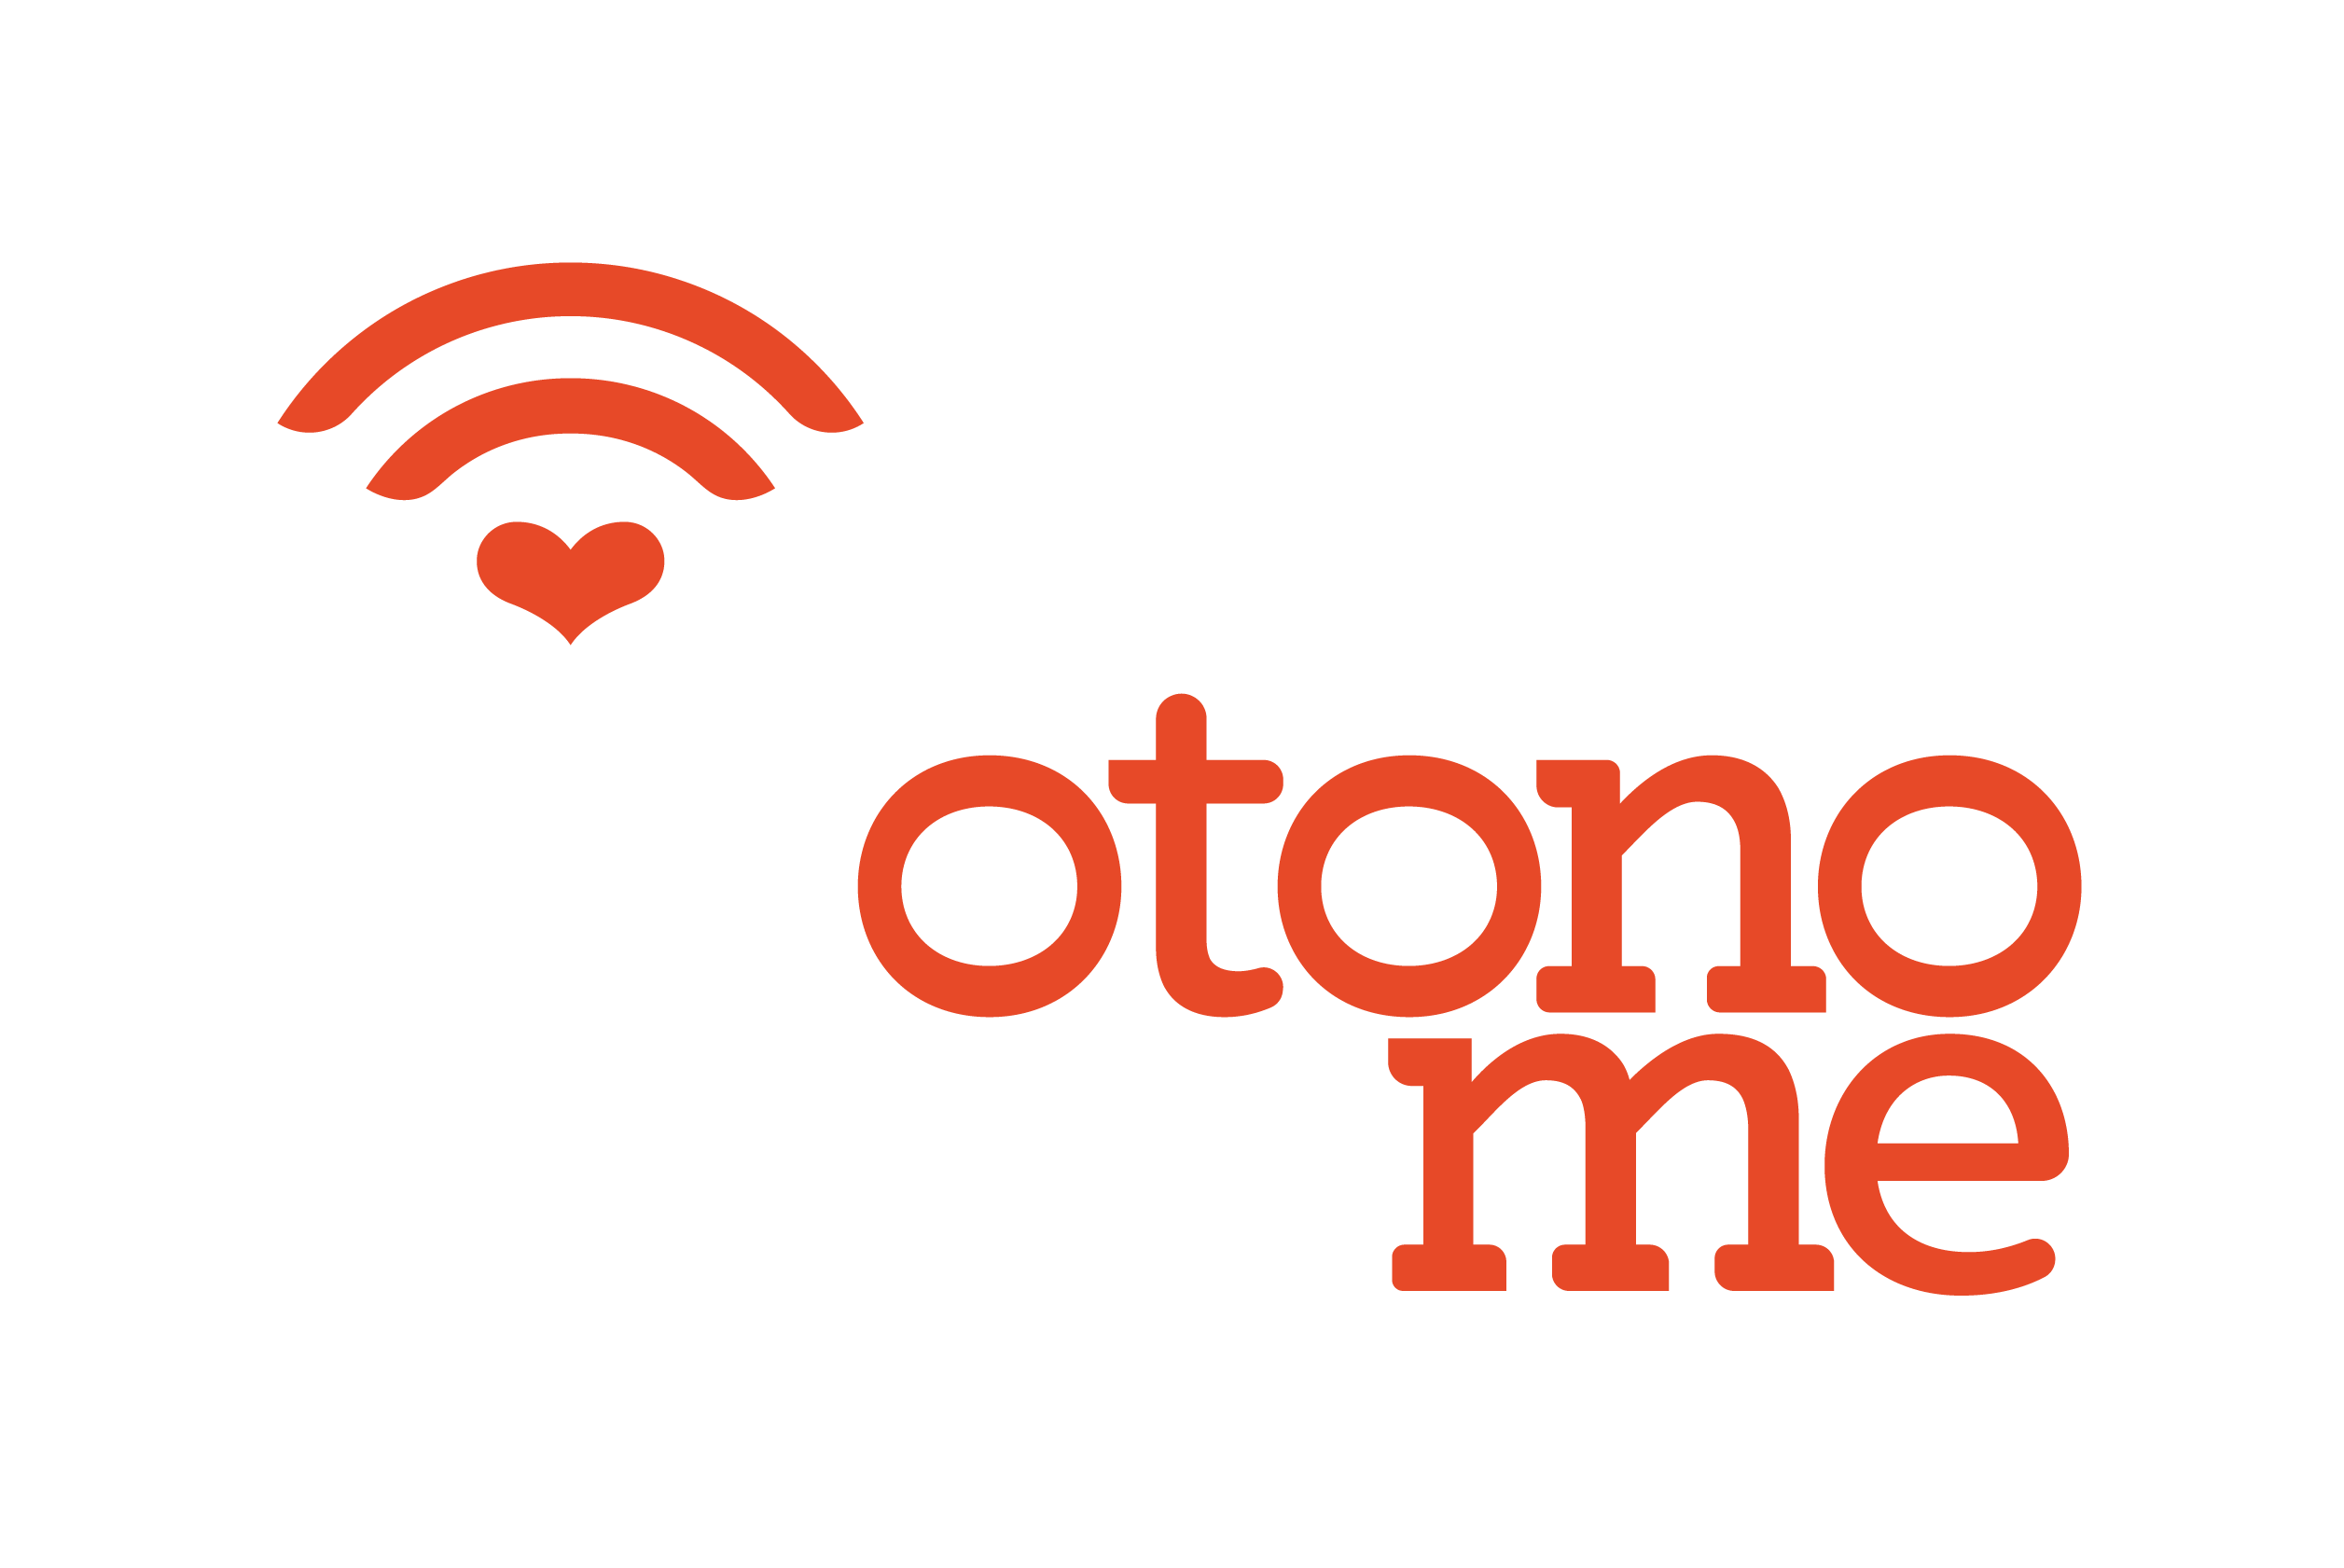 Logo complet OTONO-ME, le service de teleassistance innovante